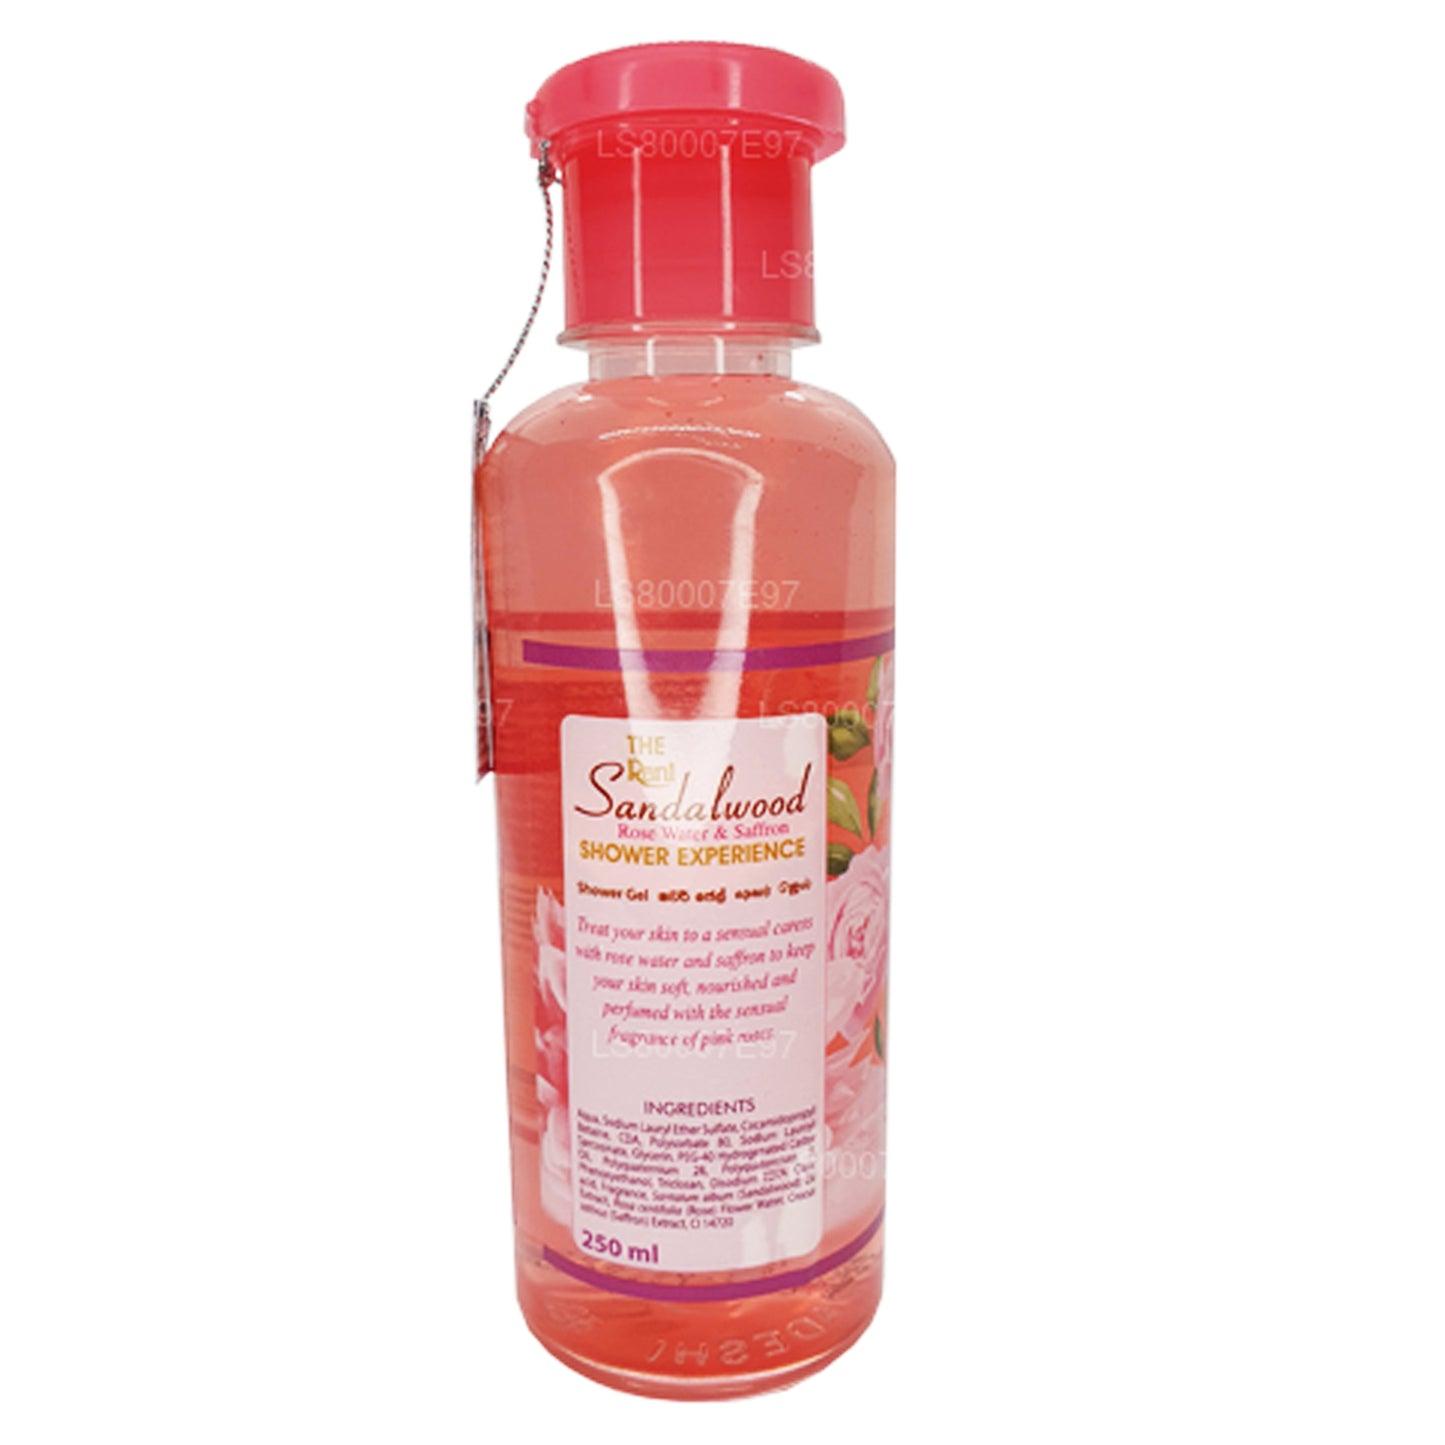 Gel de ducha Swadeshi Rani Sandalwood, agua de rosas y azafrán (250 ml)